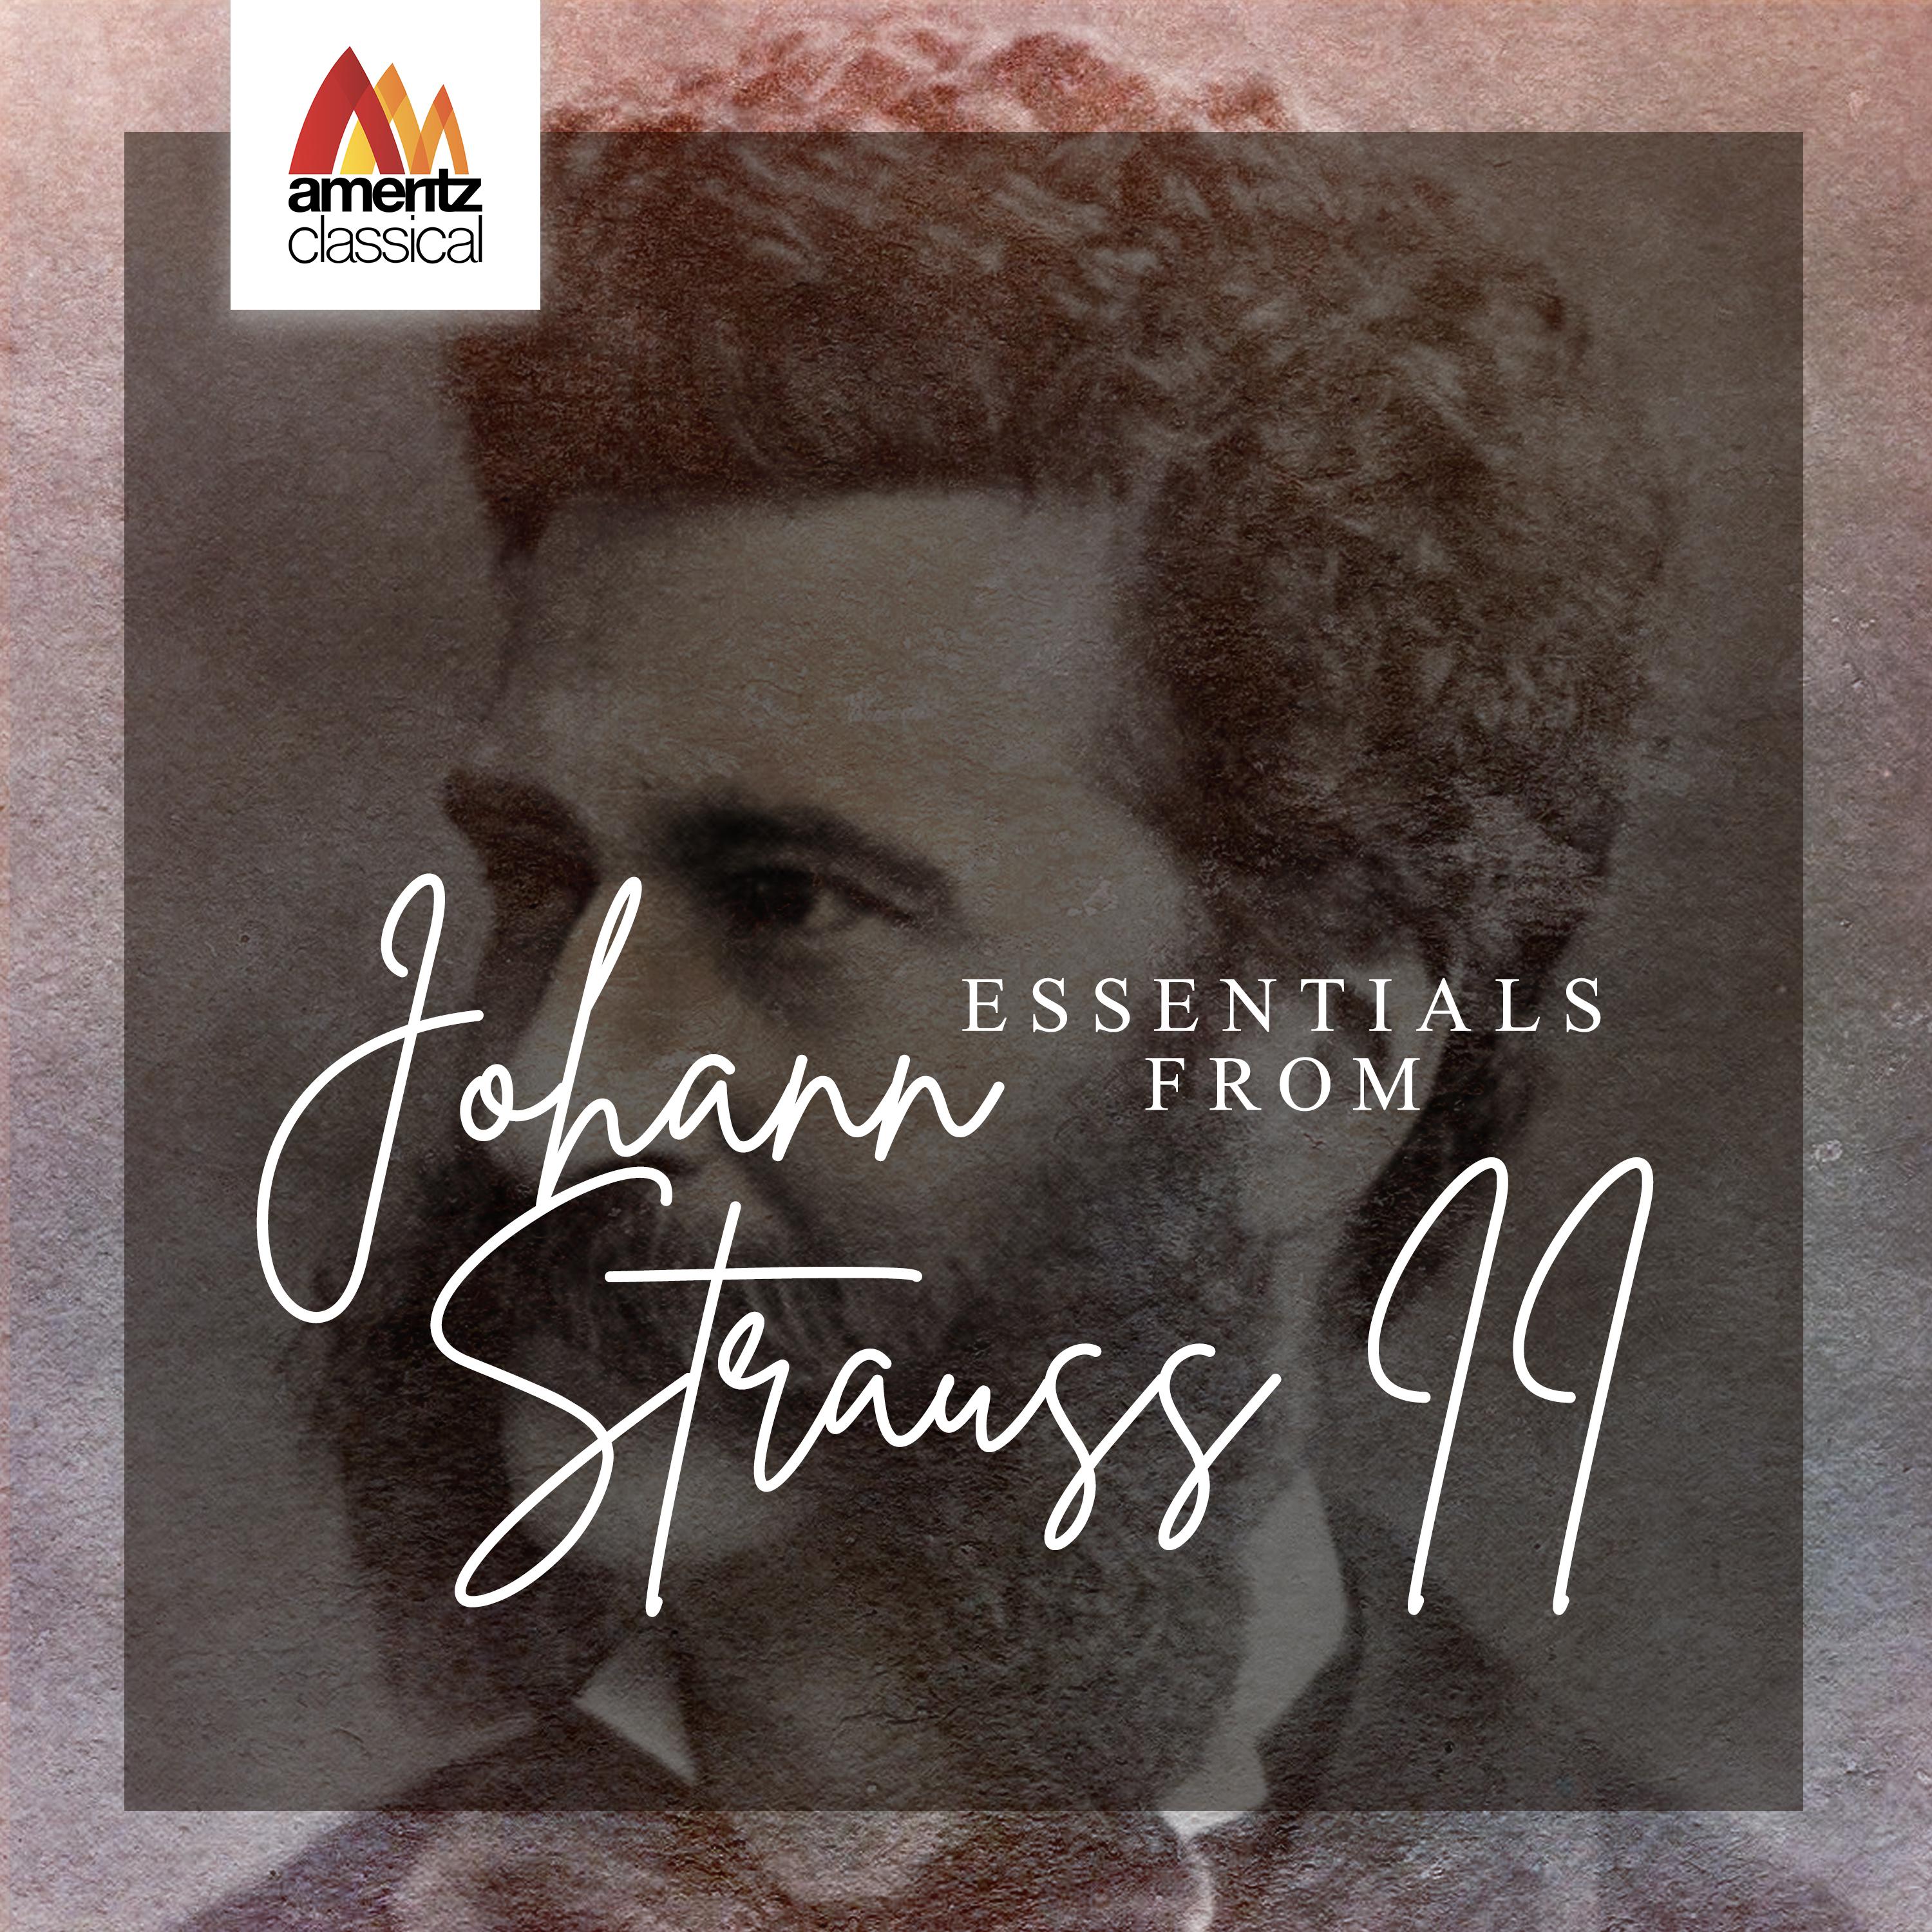 Essentials from Johann Strauss II